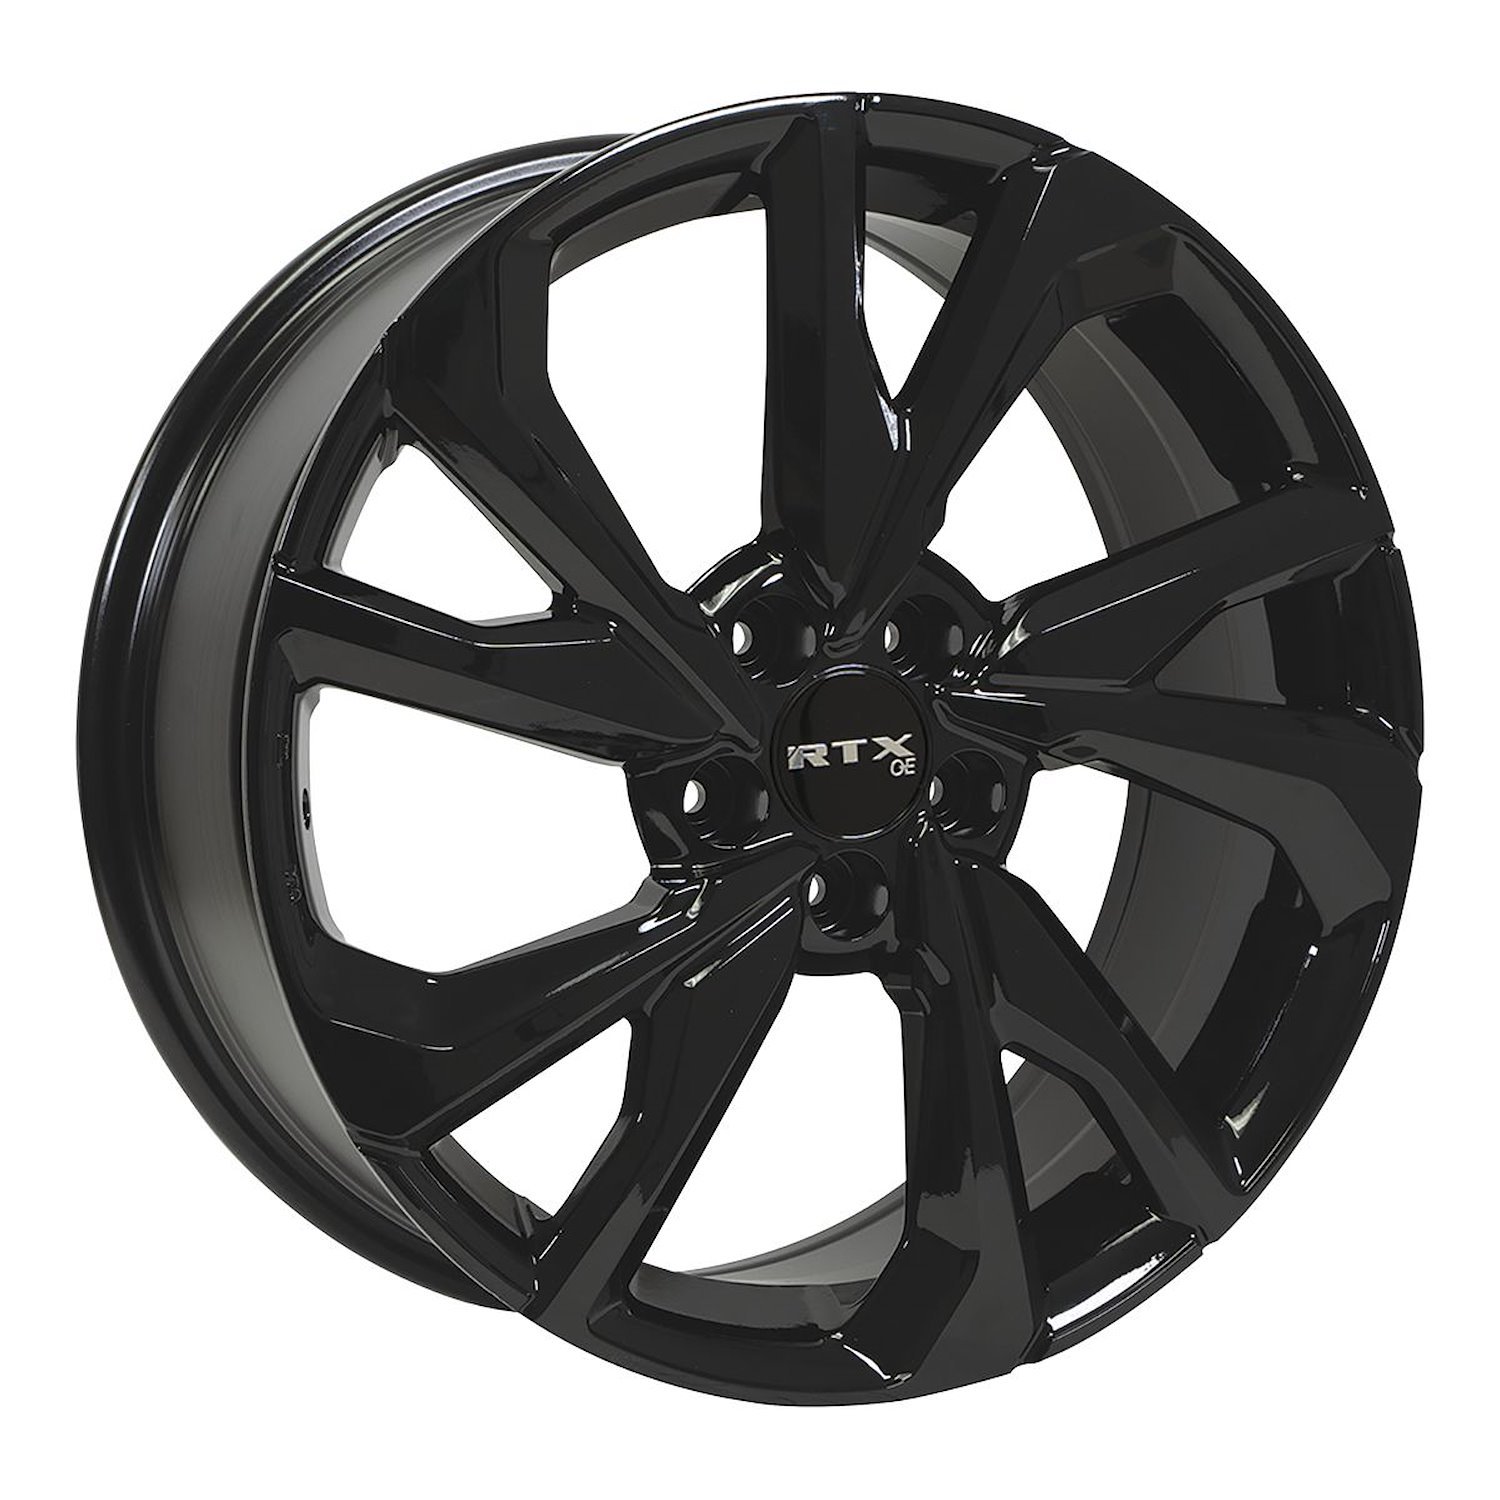 082231 OE-Series Nikko Wheel [Size: 16" x 7"] Gloss Black Finish